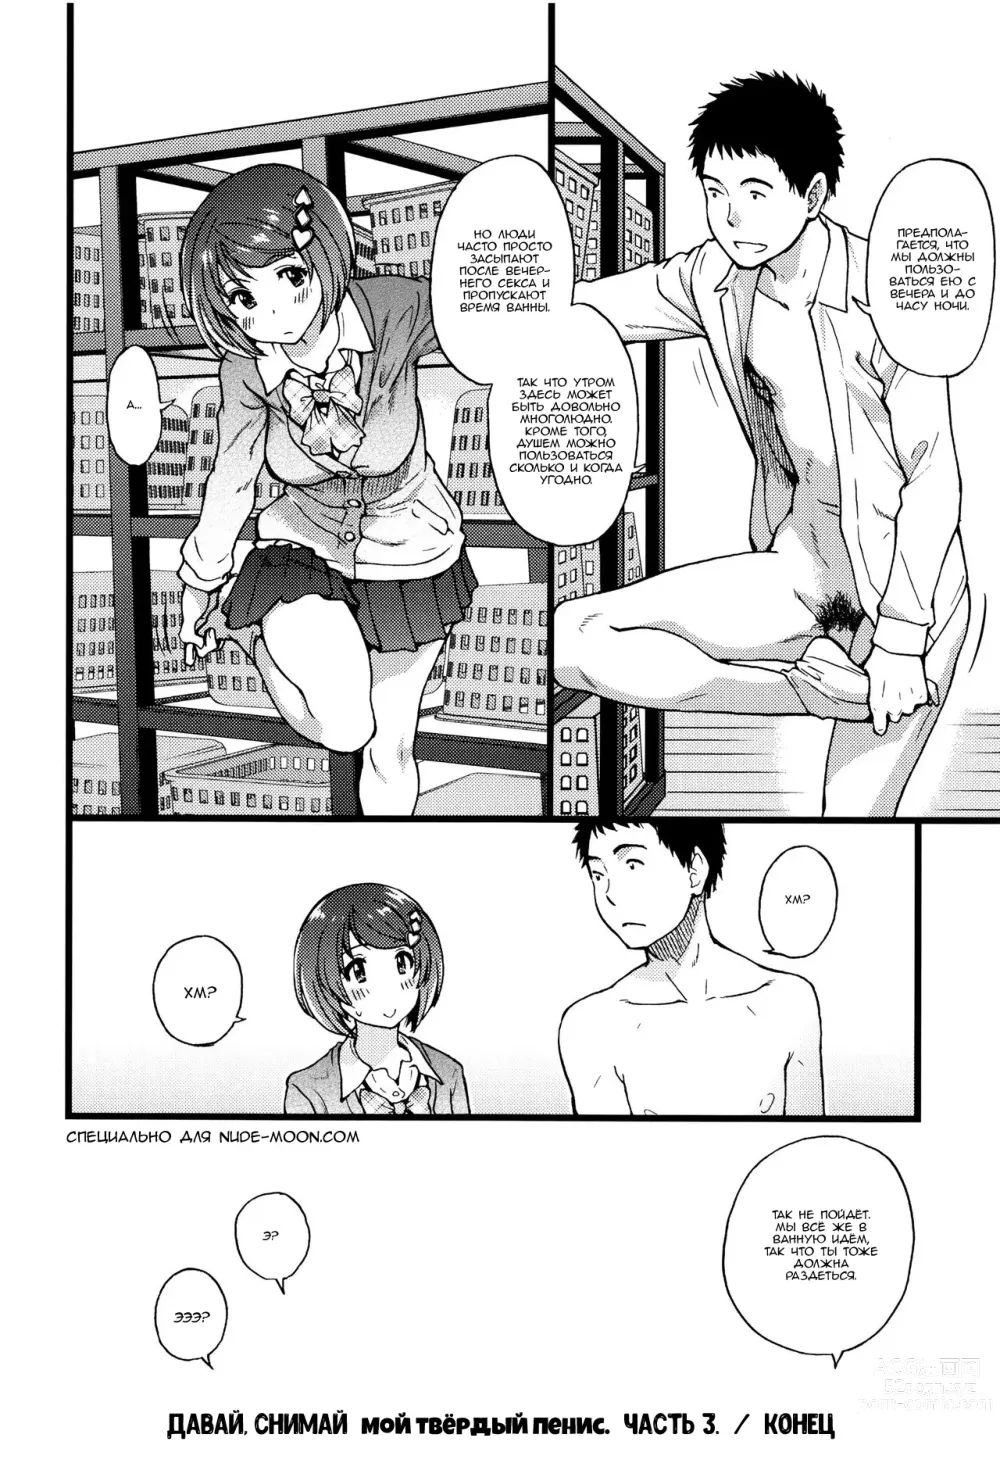 Page 174 of manga Ero Pippi 1-7